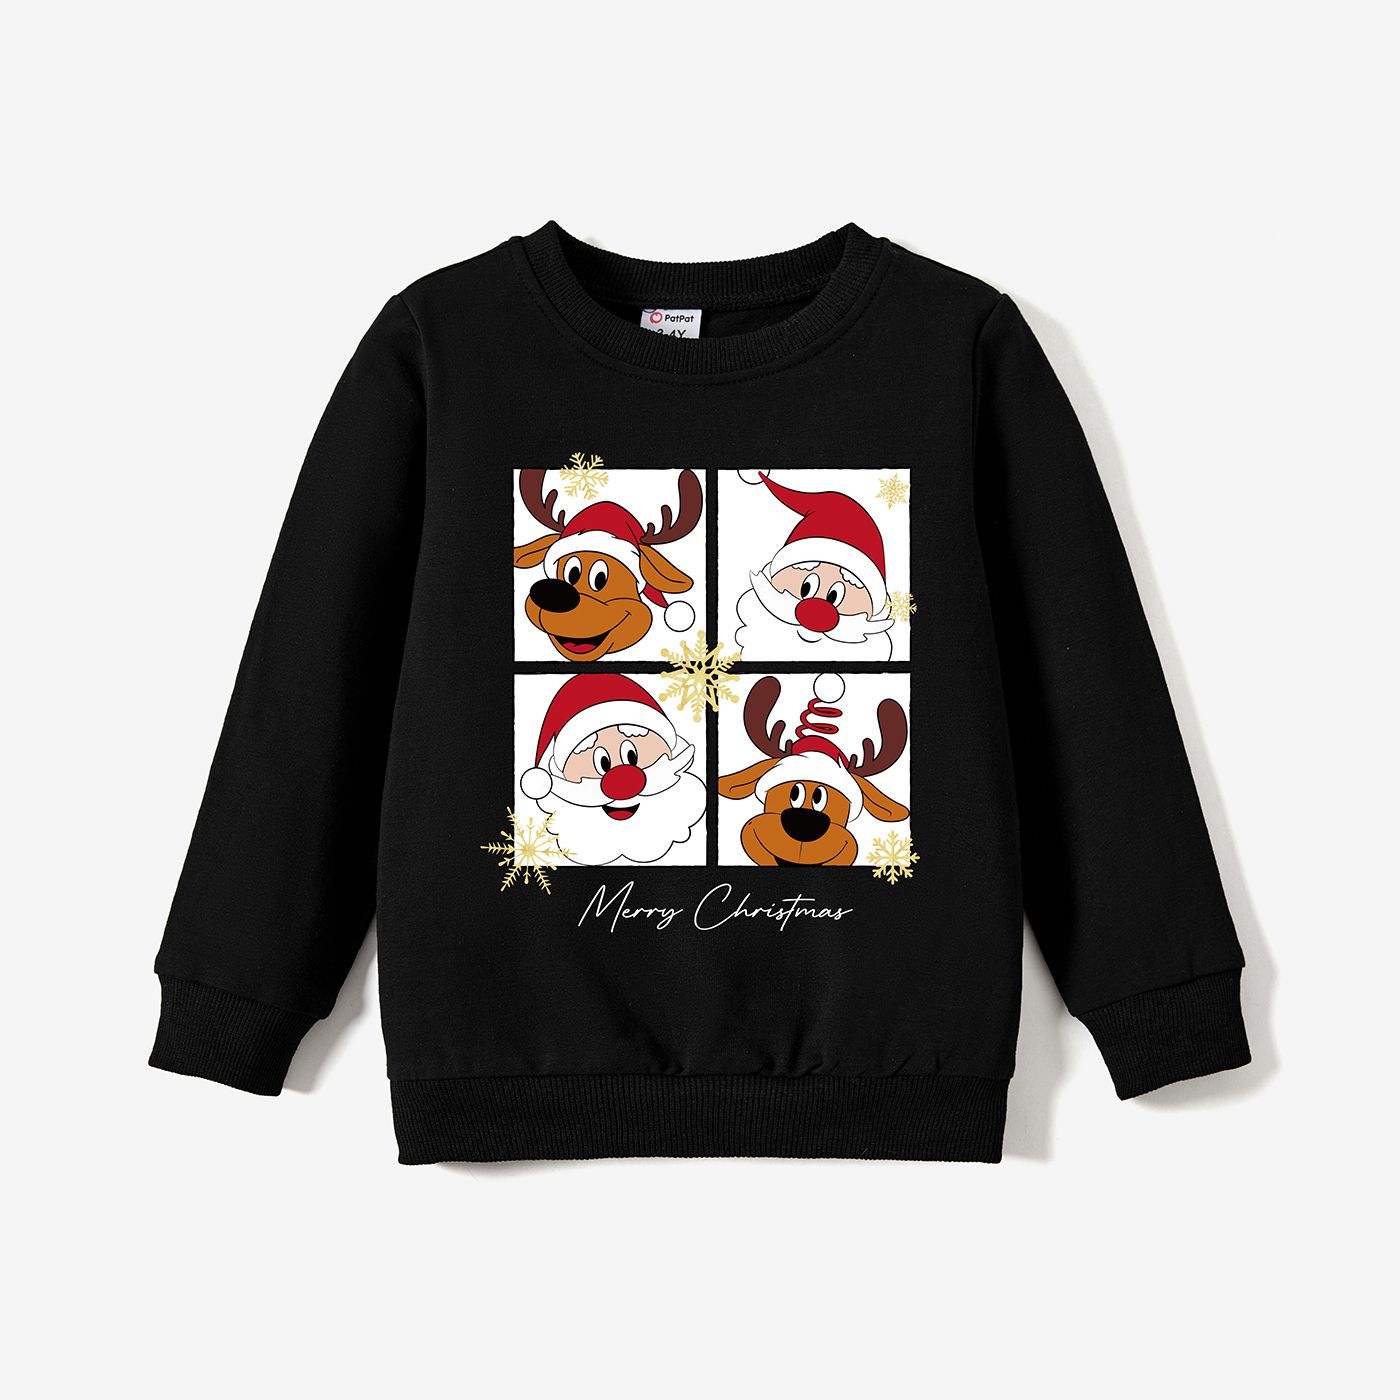 

Christmas Family Matching Cotton Santa & Reindeer Print Long Sleeve Tops